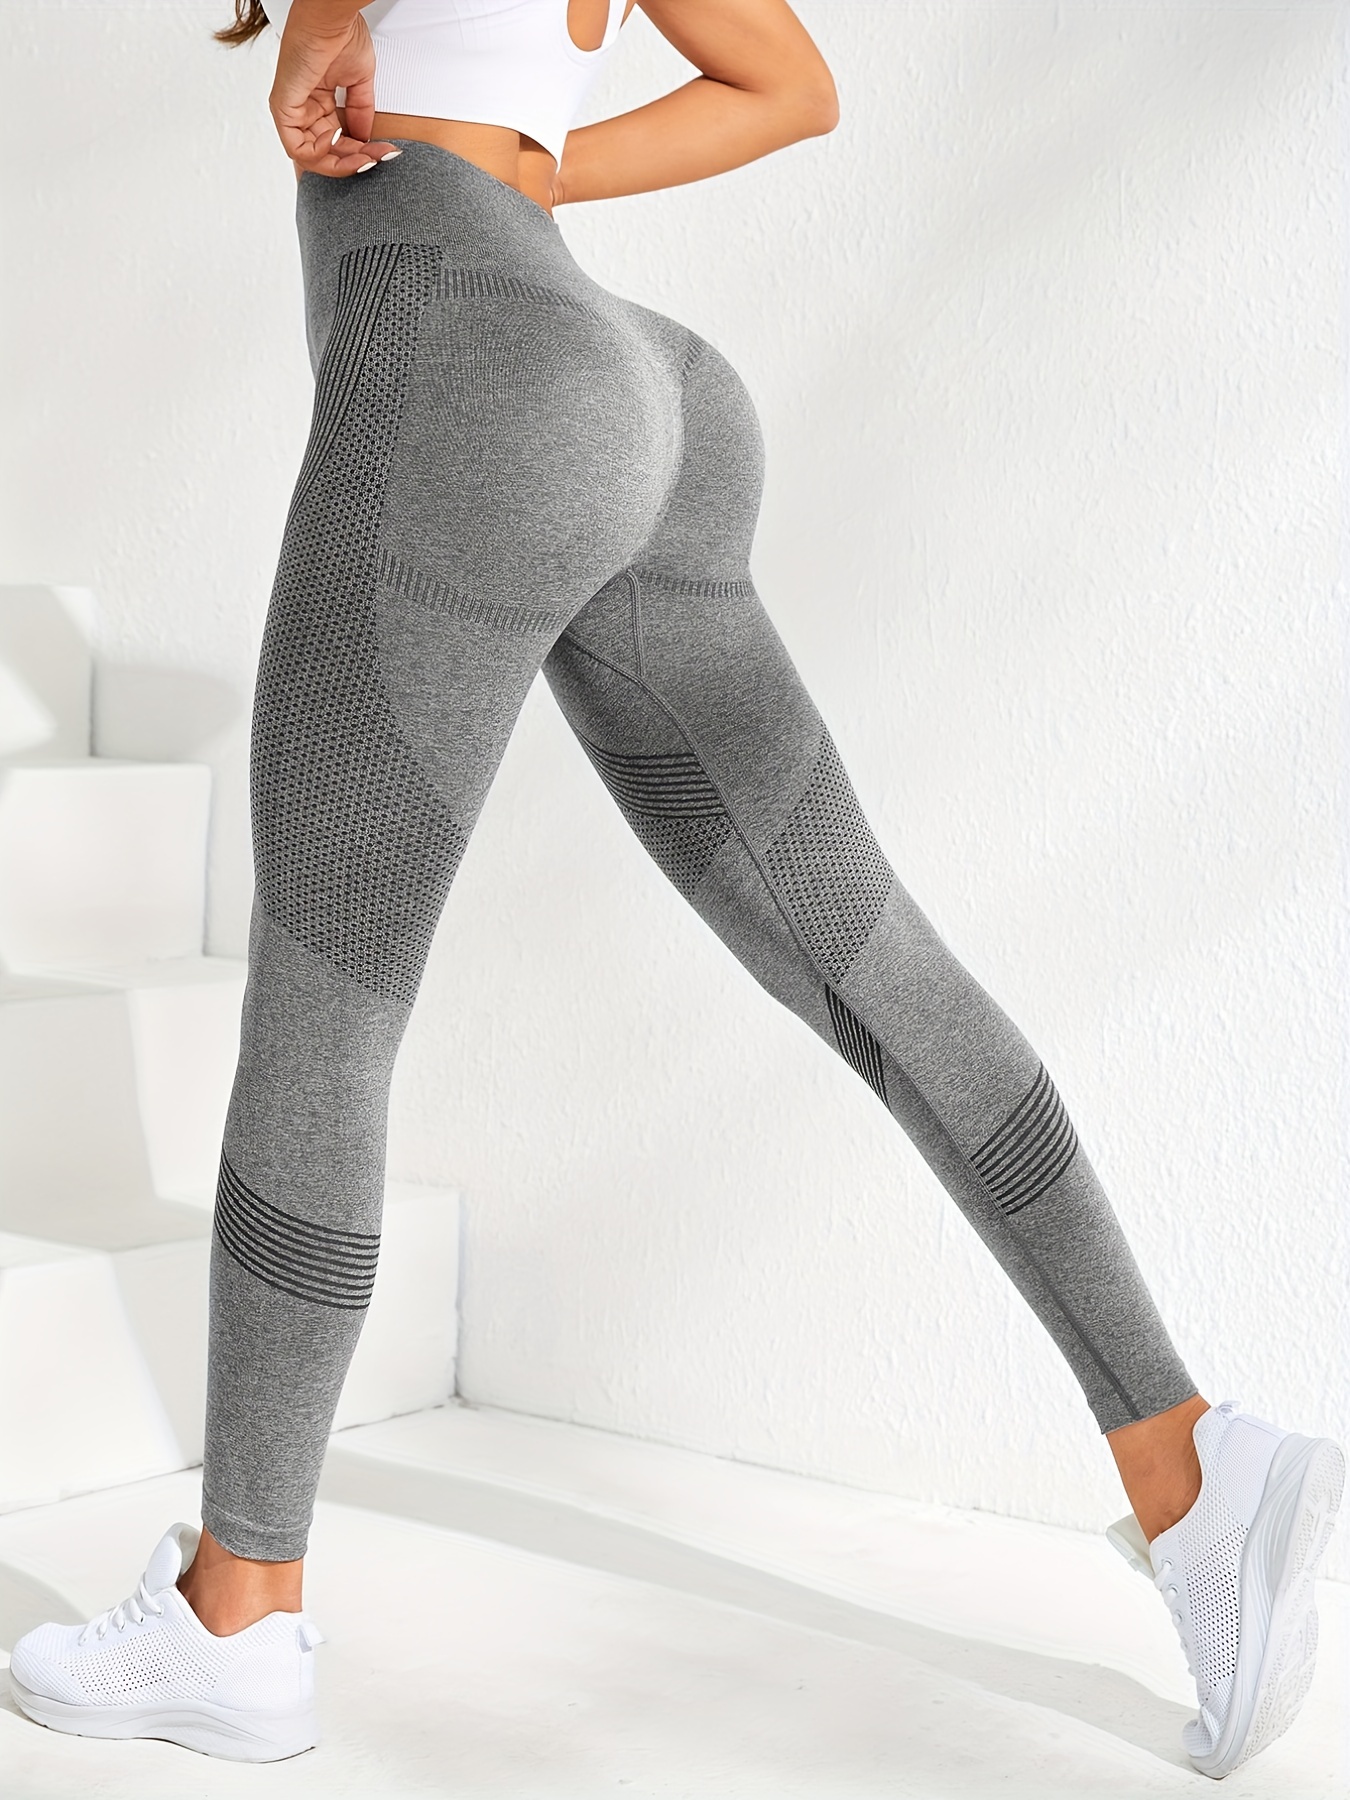 Dropship 3pcs Seamless Striped Yoga Leggings For Women, High